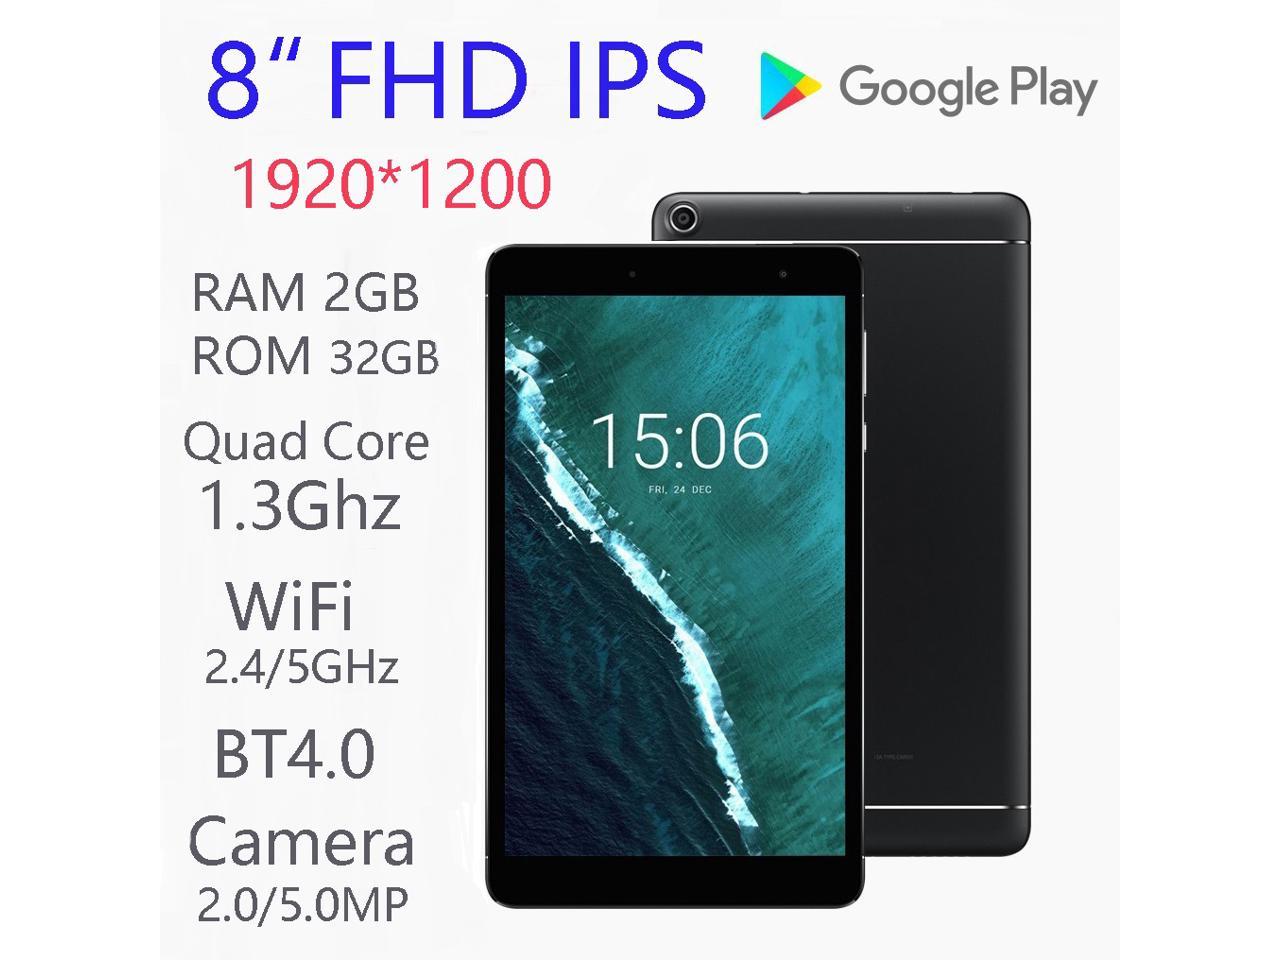 Nexanic Hi8 SE 8 inch FHD IPS 1920*1200 MTK8735 Quad Core Android 8.1 RAM 2GB ROM 32GB Dual Camera Dual Band WiFi 2.4G/5G 8